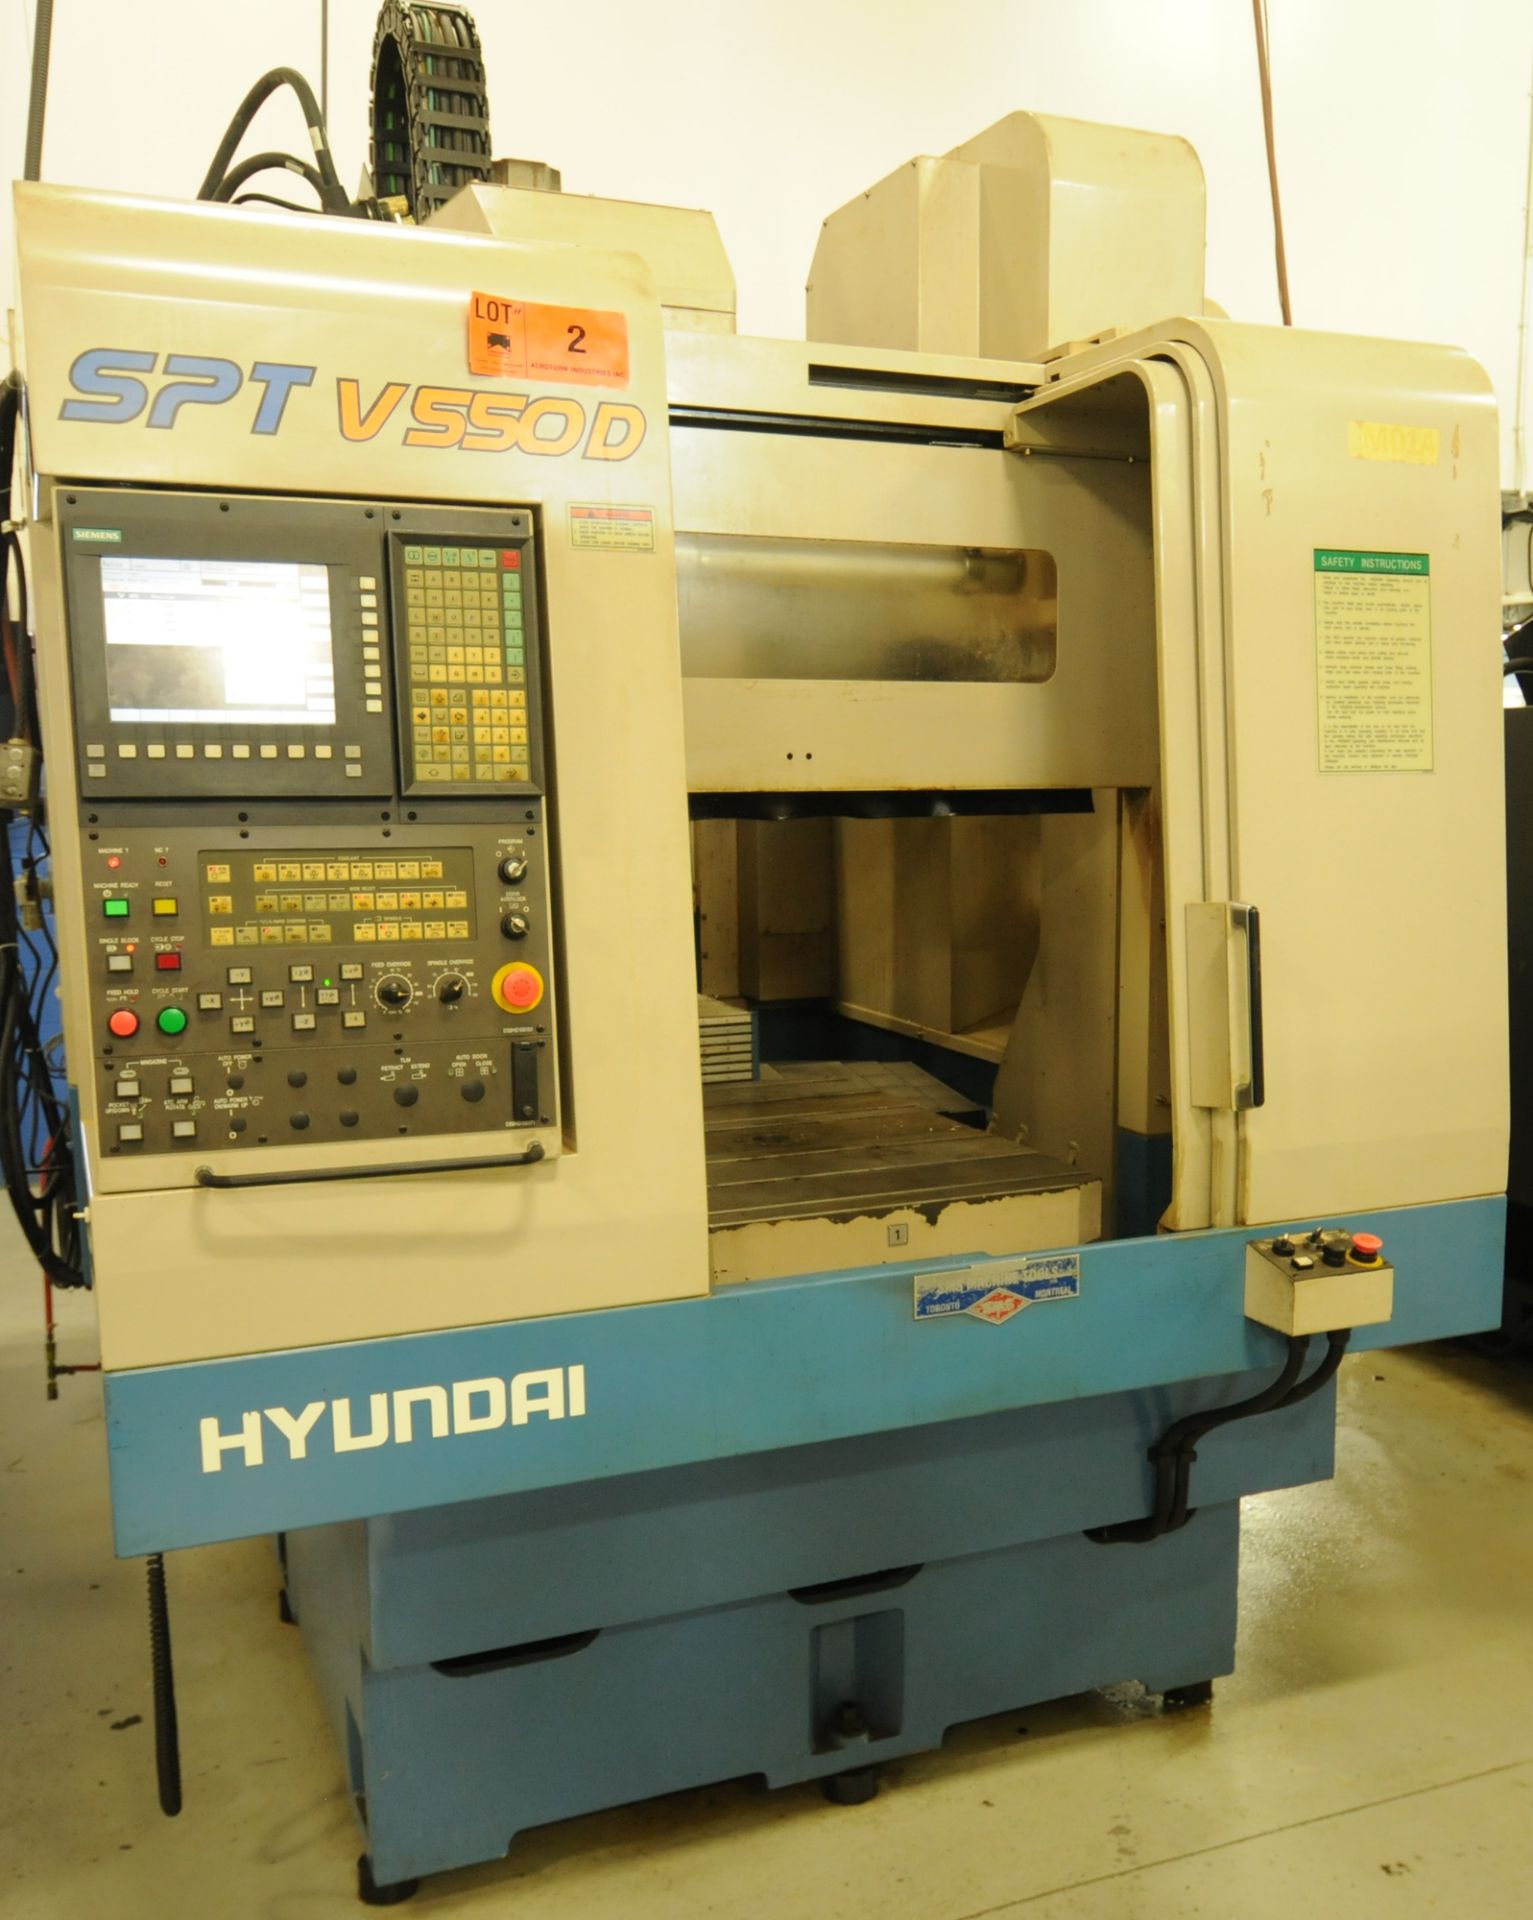 HYUNDAI (2001) SPT-V550D CNC TWIN PALLET VERTICAL MACHINING CENTER WITH SIEMENS CNC CONTROL, (2)